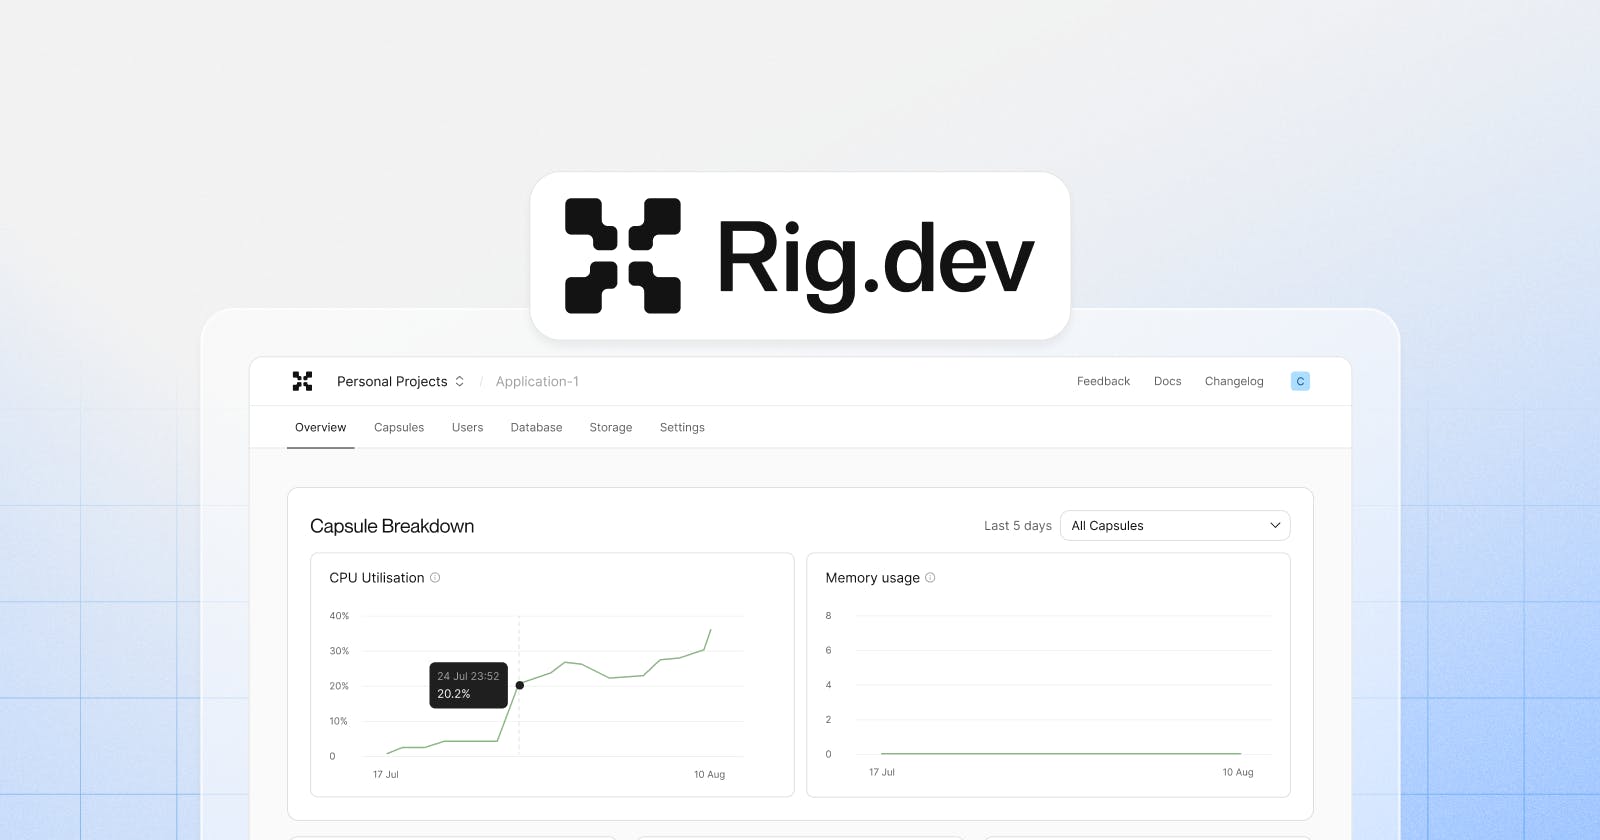 Introducing Rig.dev: The open-source application platform for Kubernetes